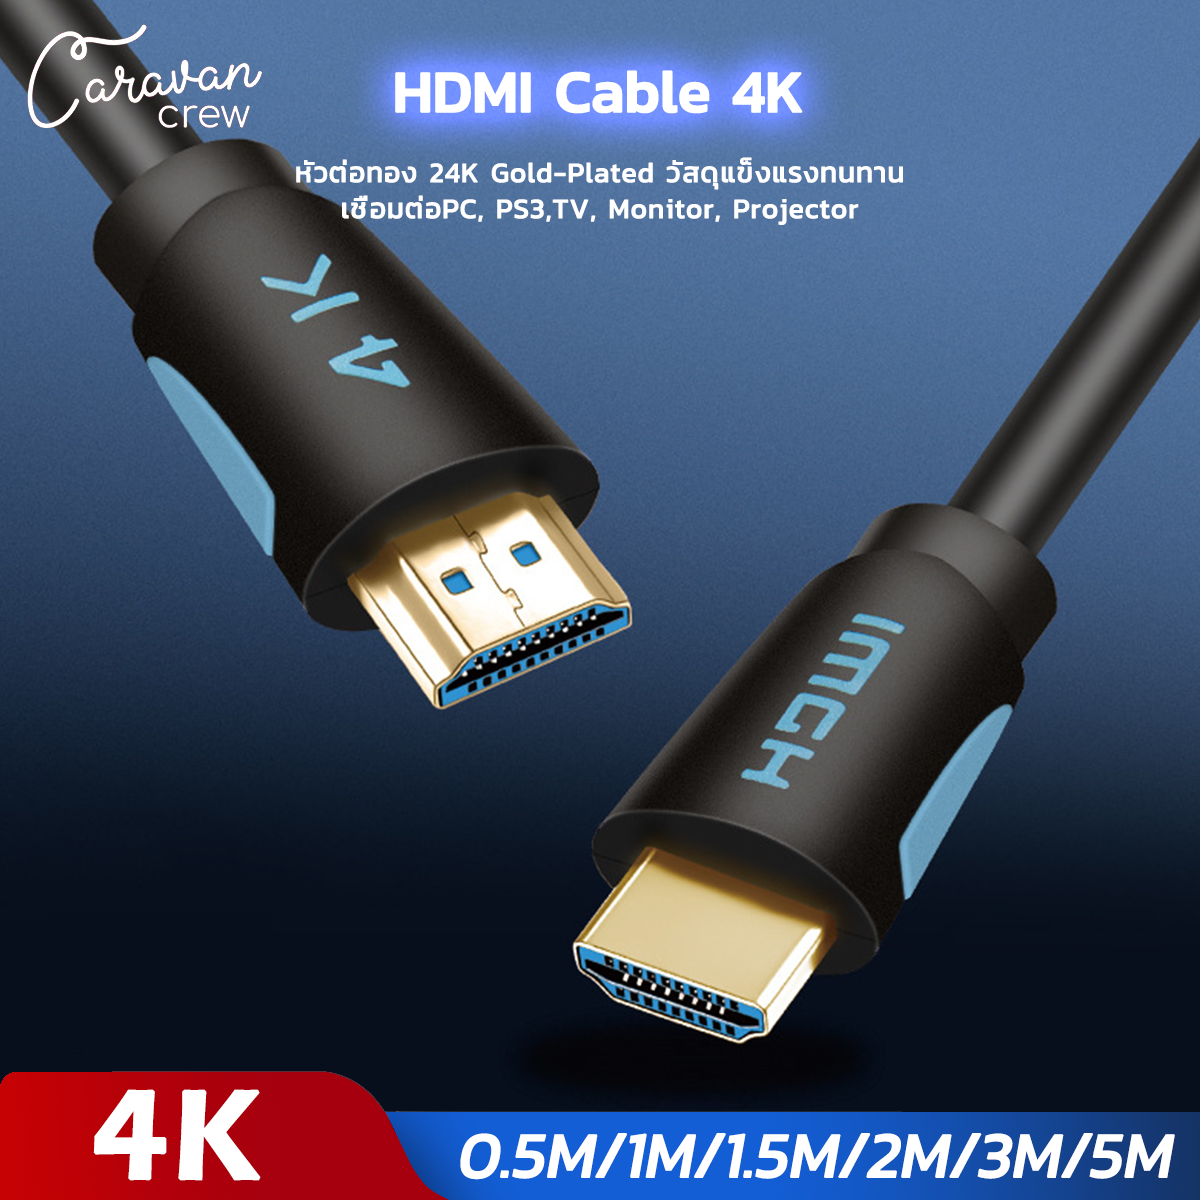 Caravan Crew HDMI Cable 4K สายต่อจอ HDMI Support 4K, TV, Monitor, Projector, PC, PS, PS4, Xbox, DVD, เครื่องเล่น